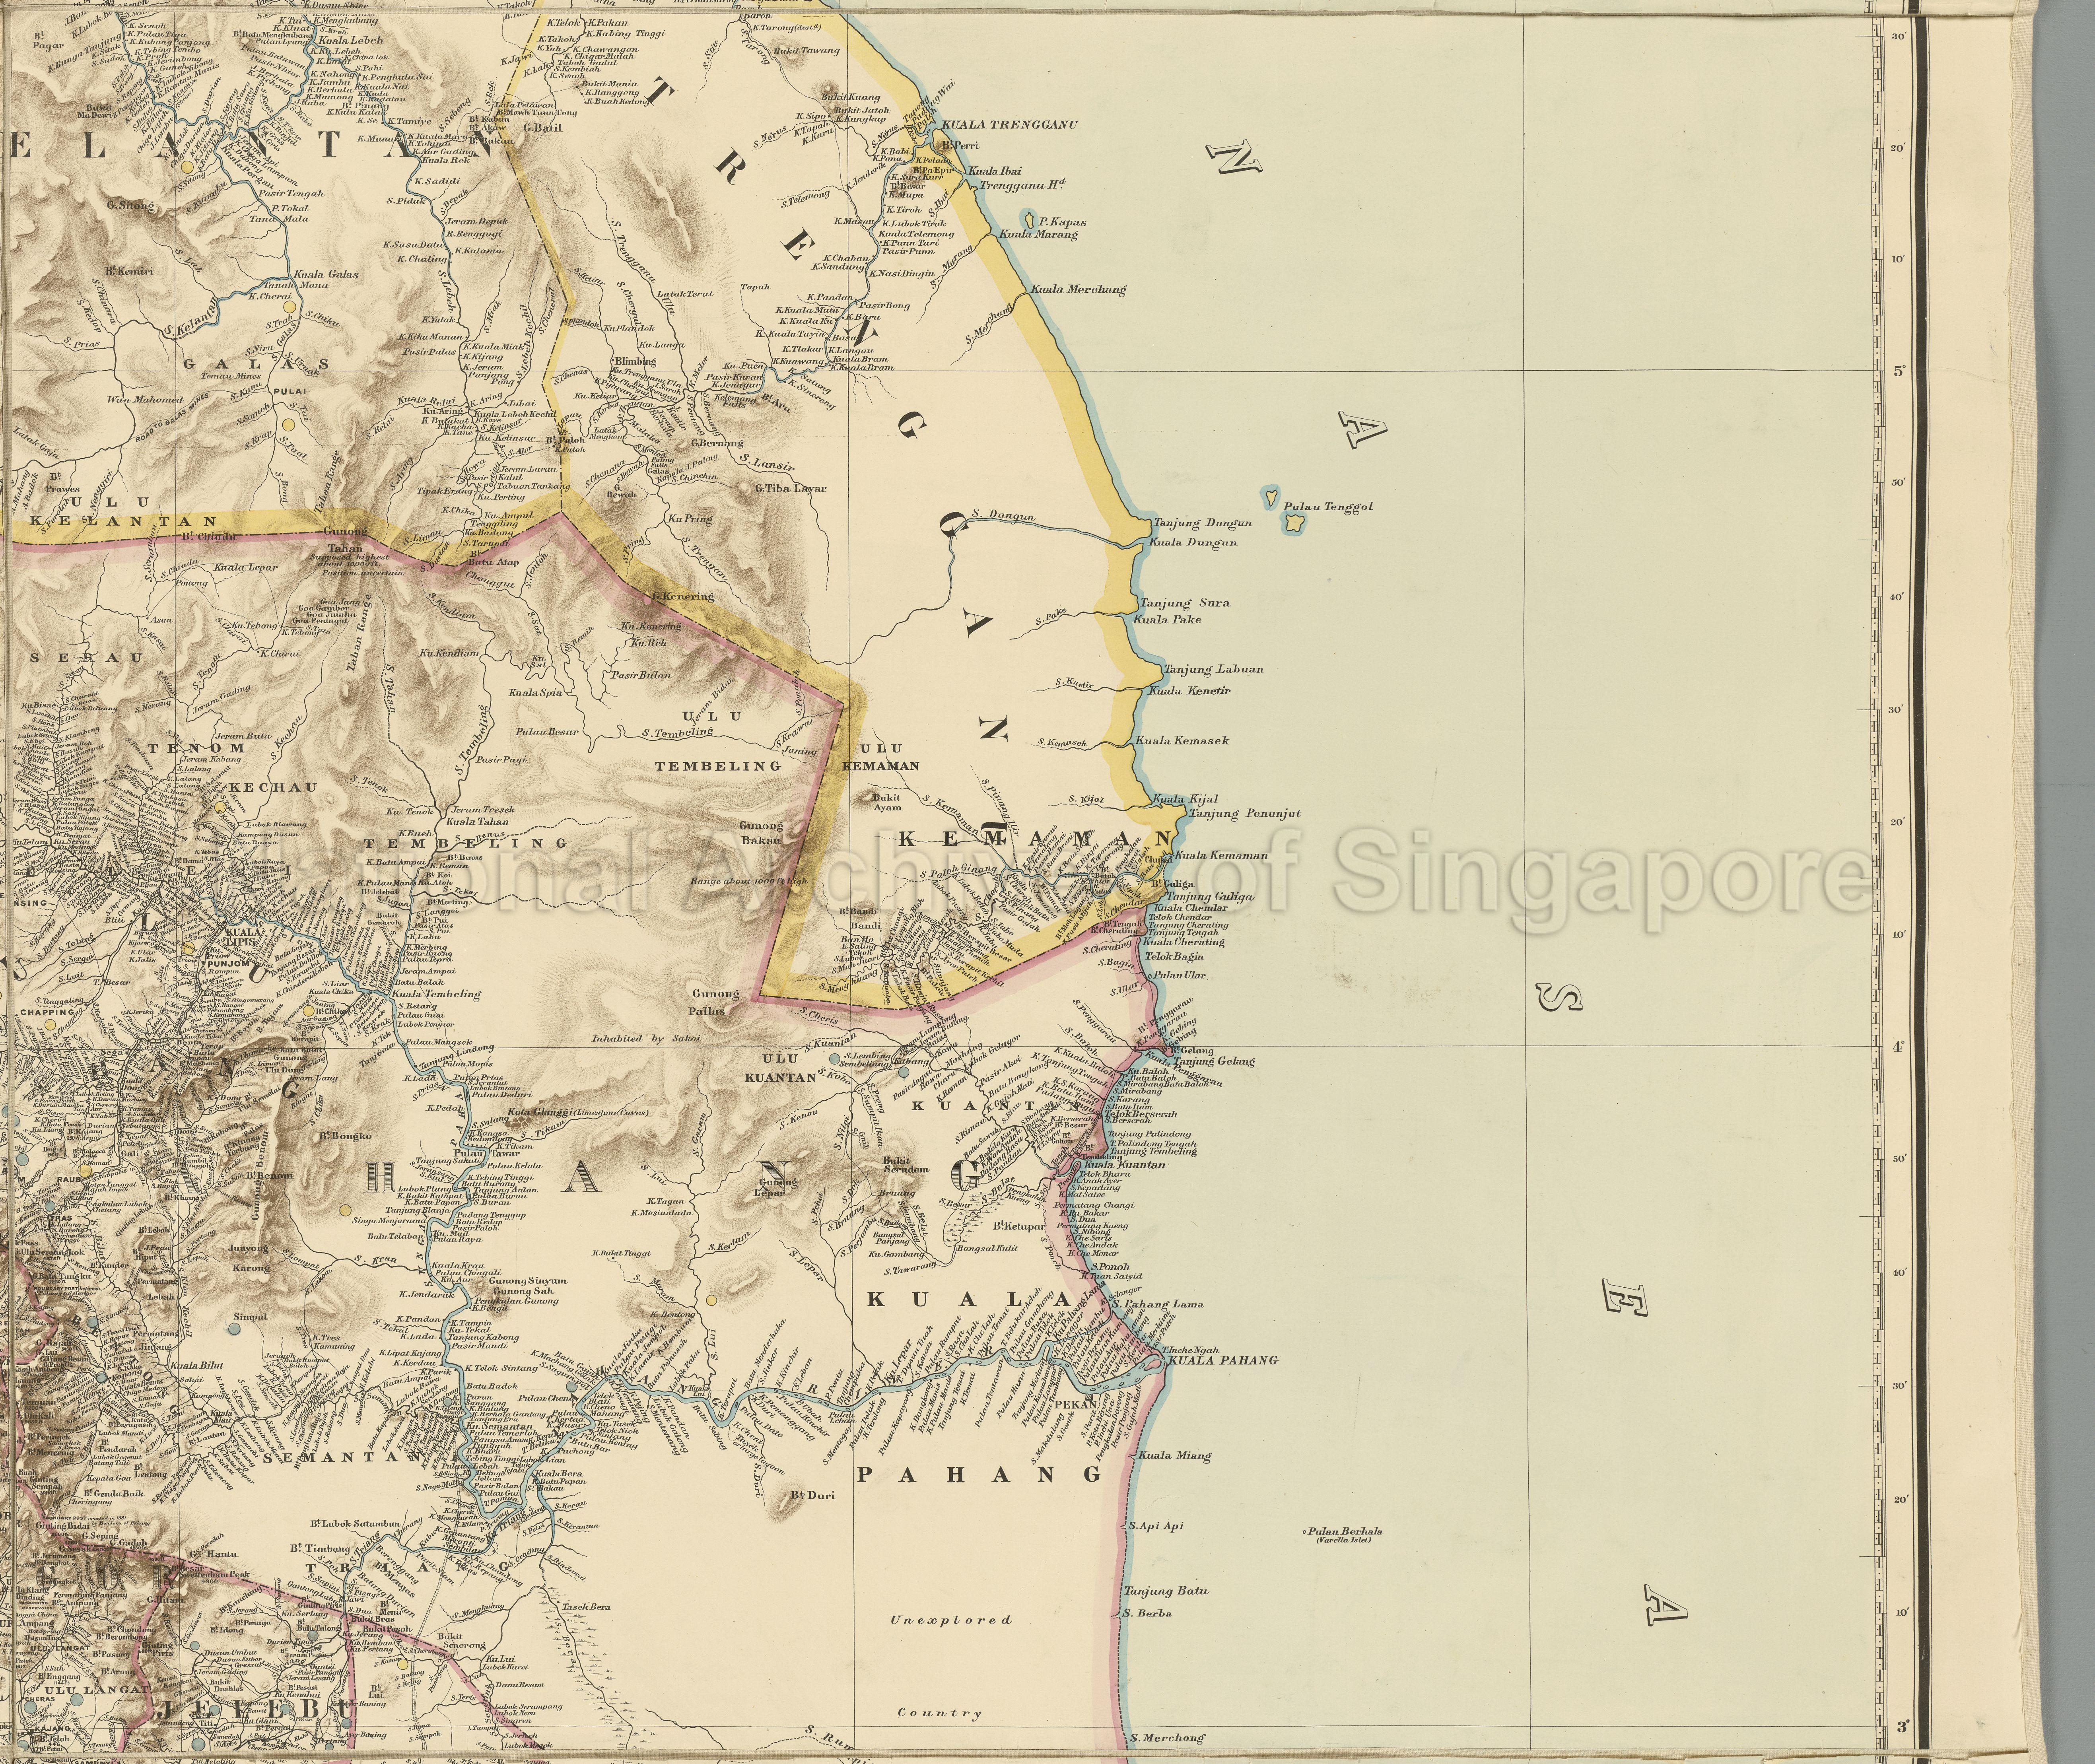 A Map of The Malay Peninsula 1898